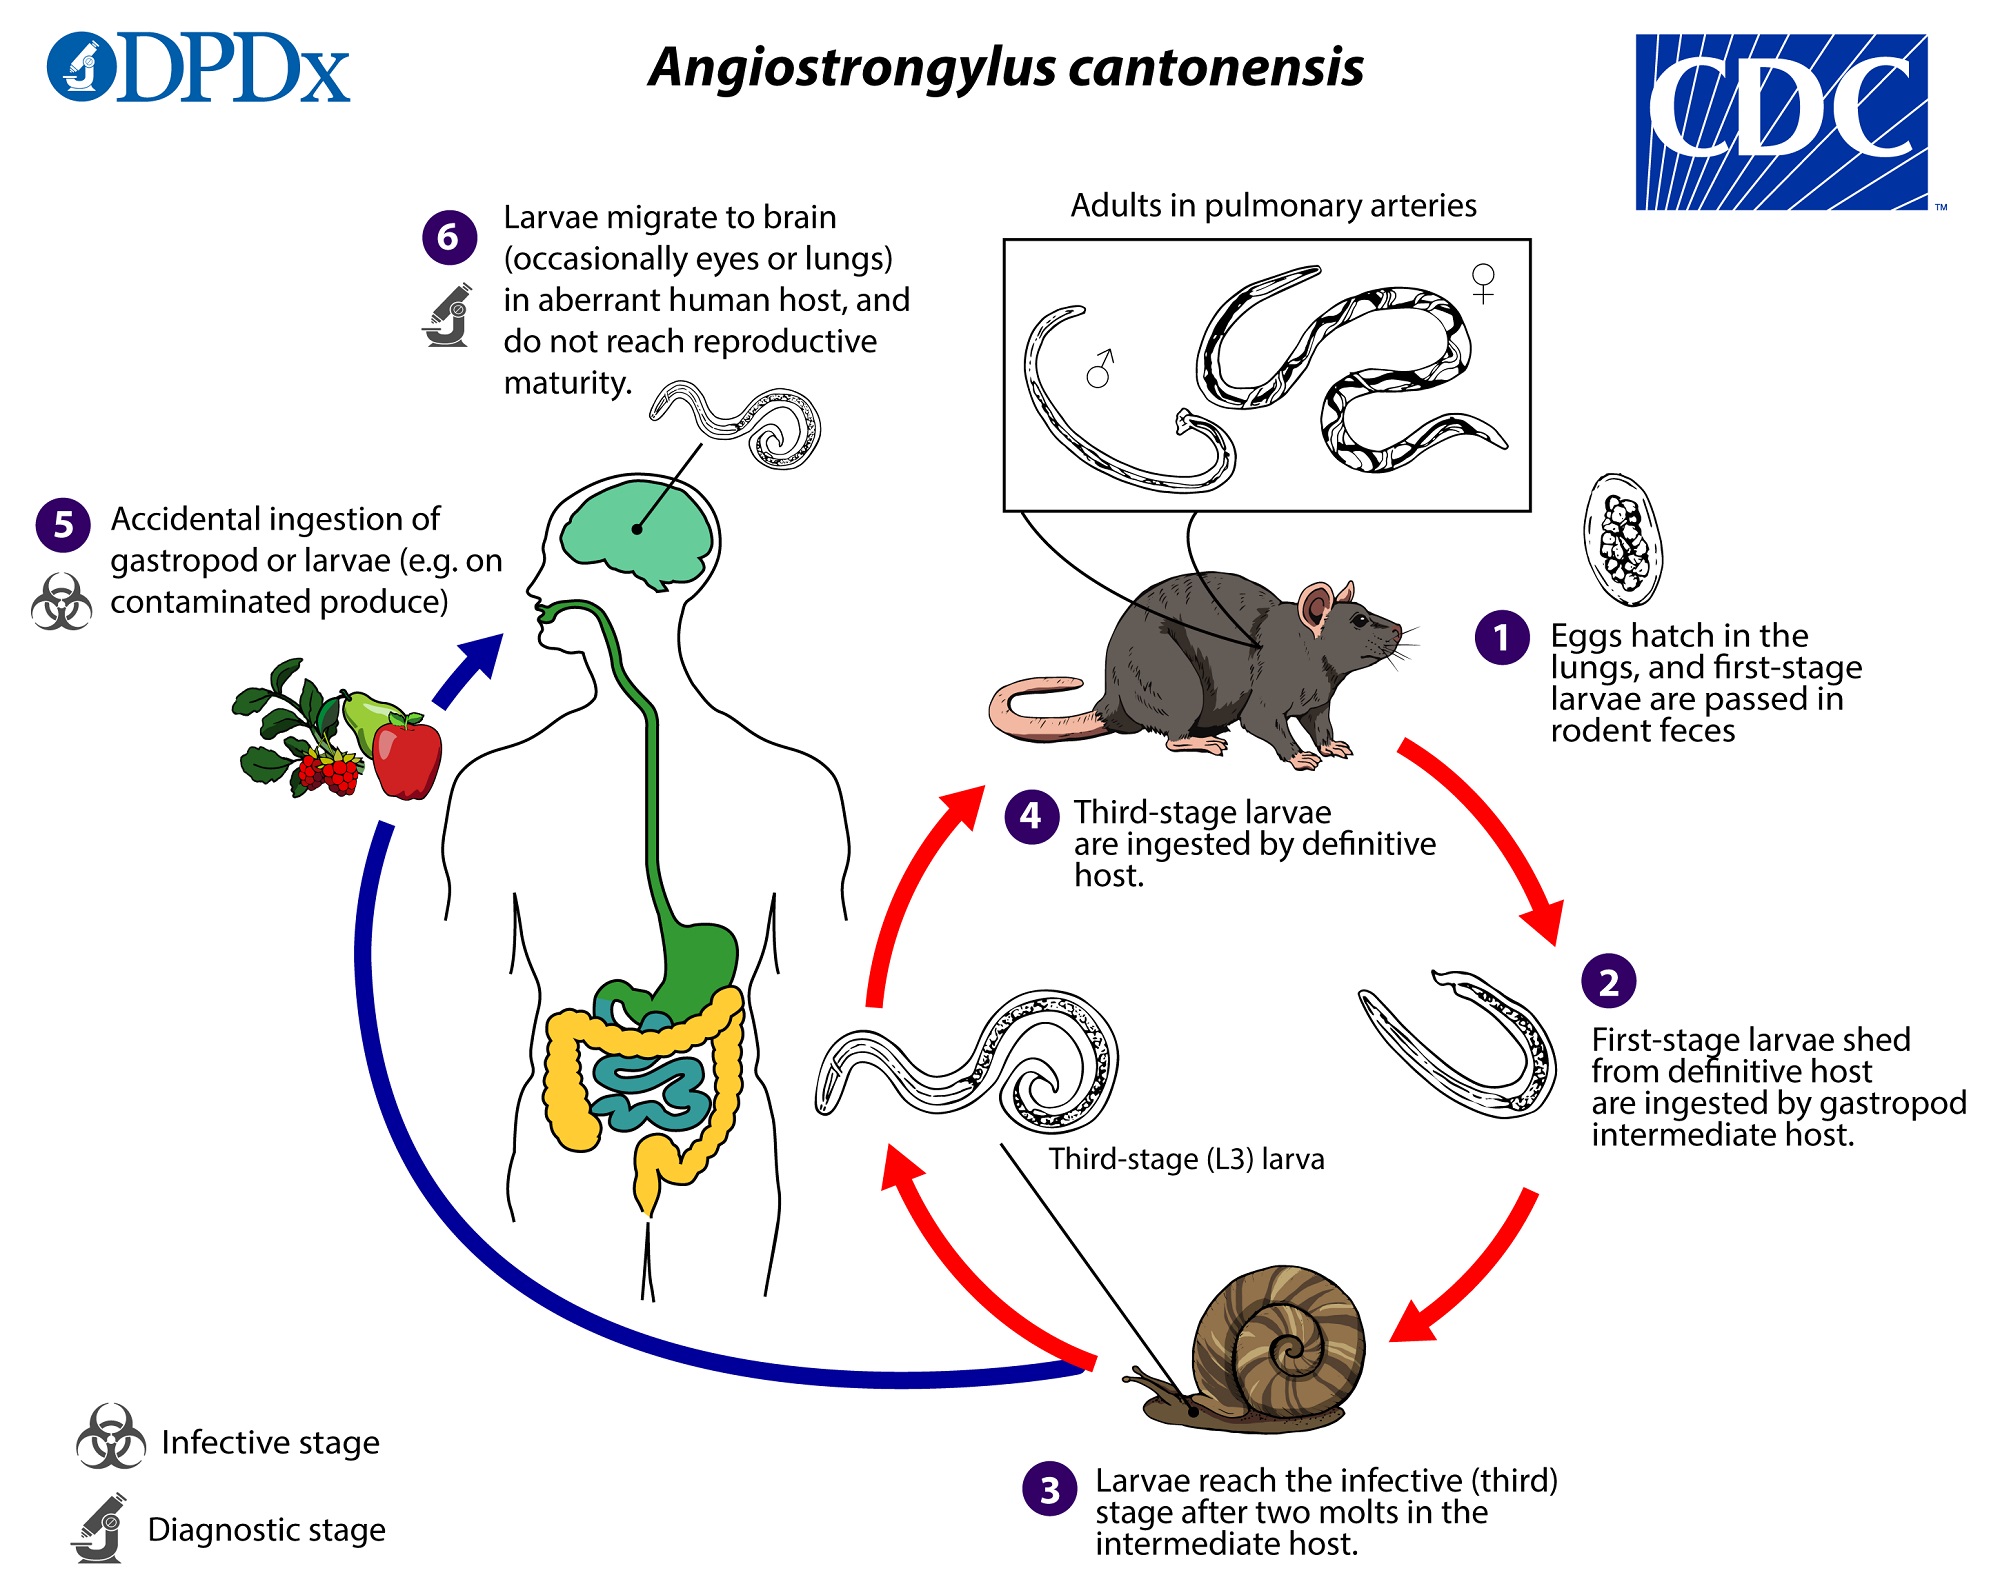 Angiostrongylus cantonensis life cycle. cdc.gov